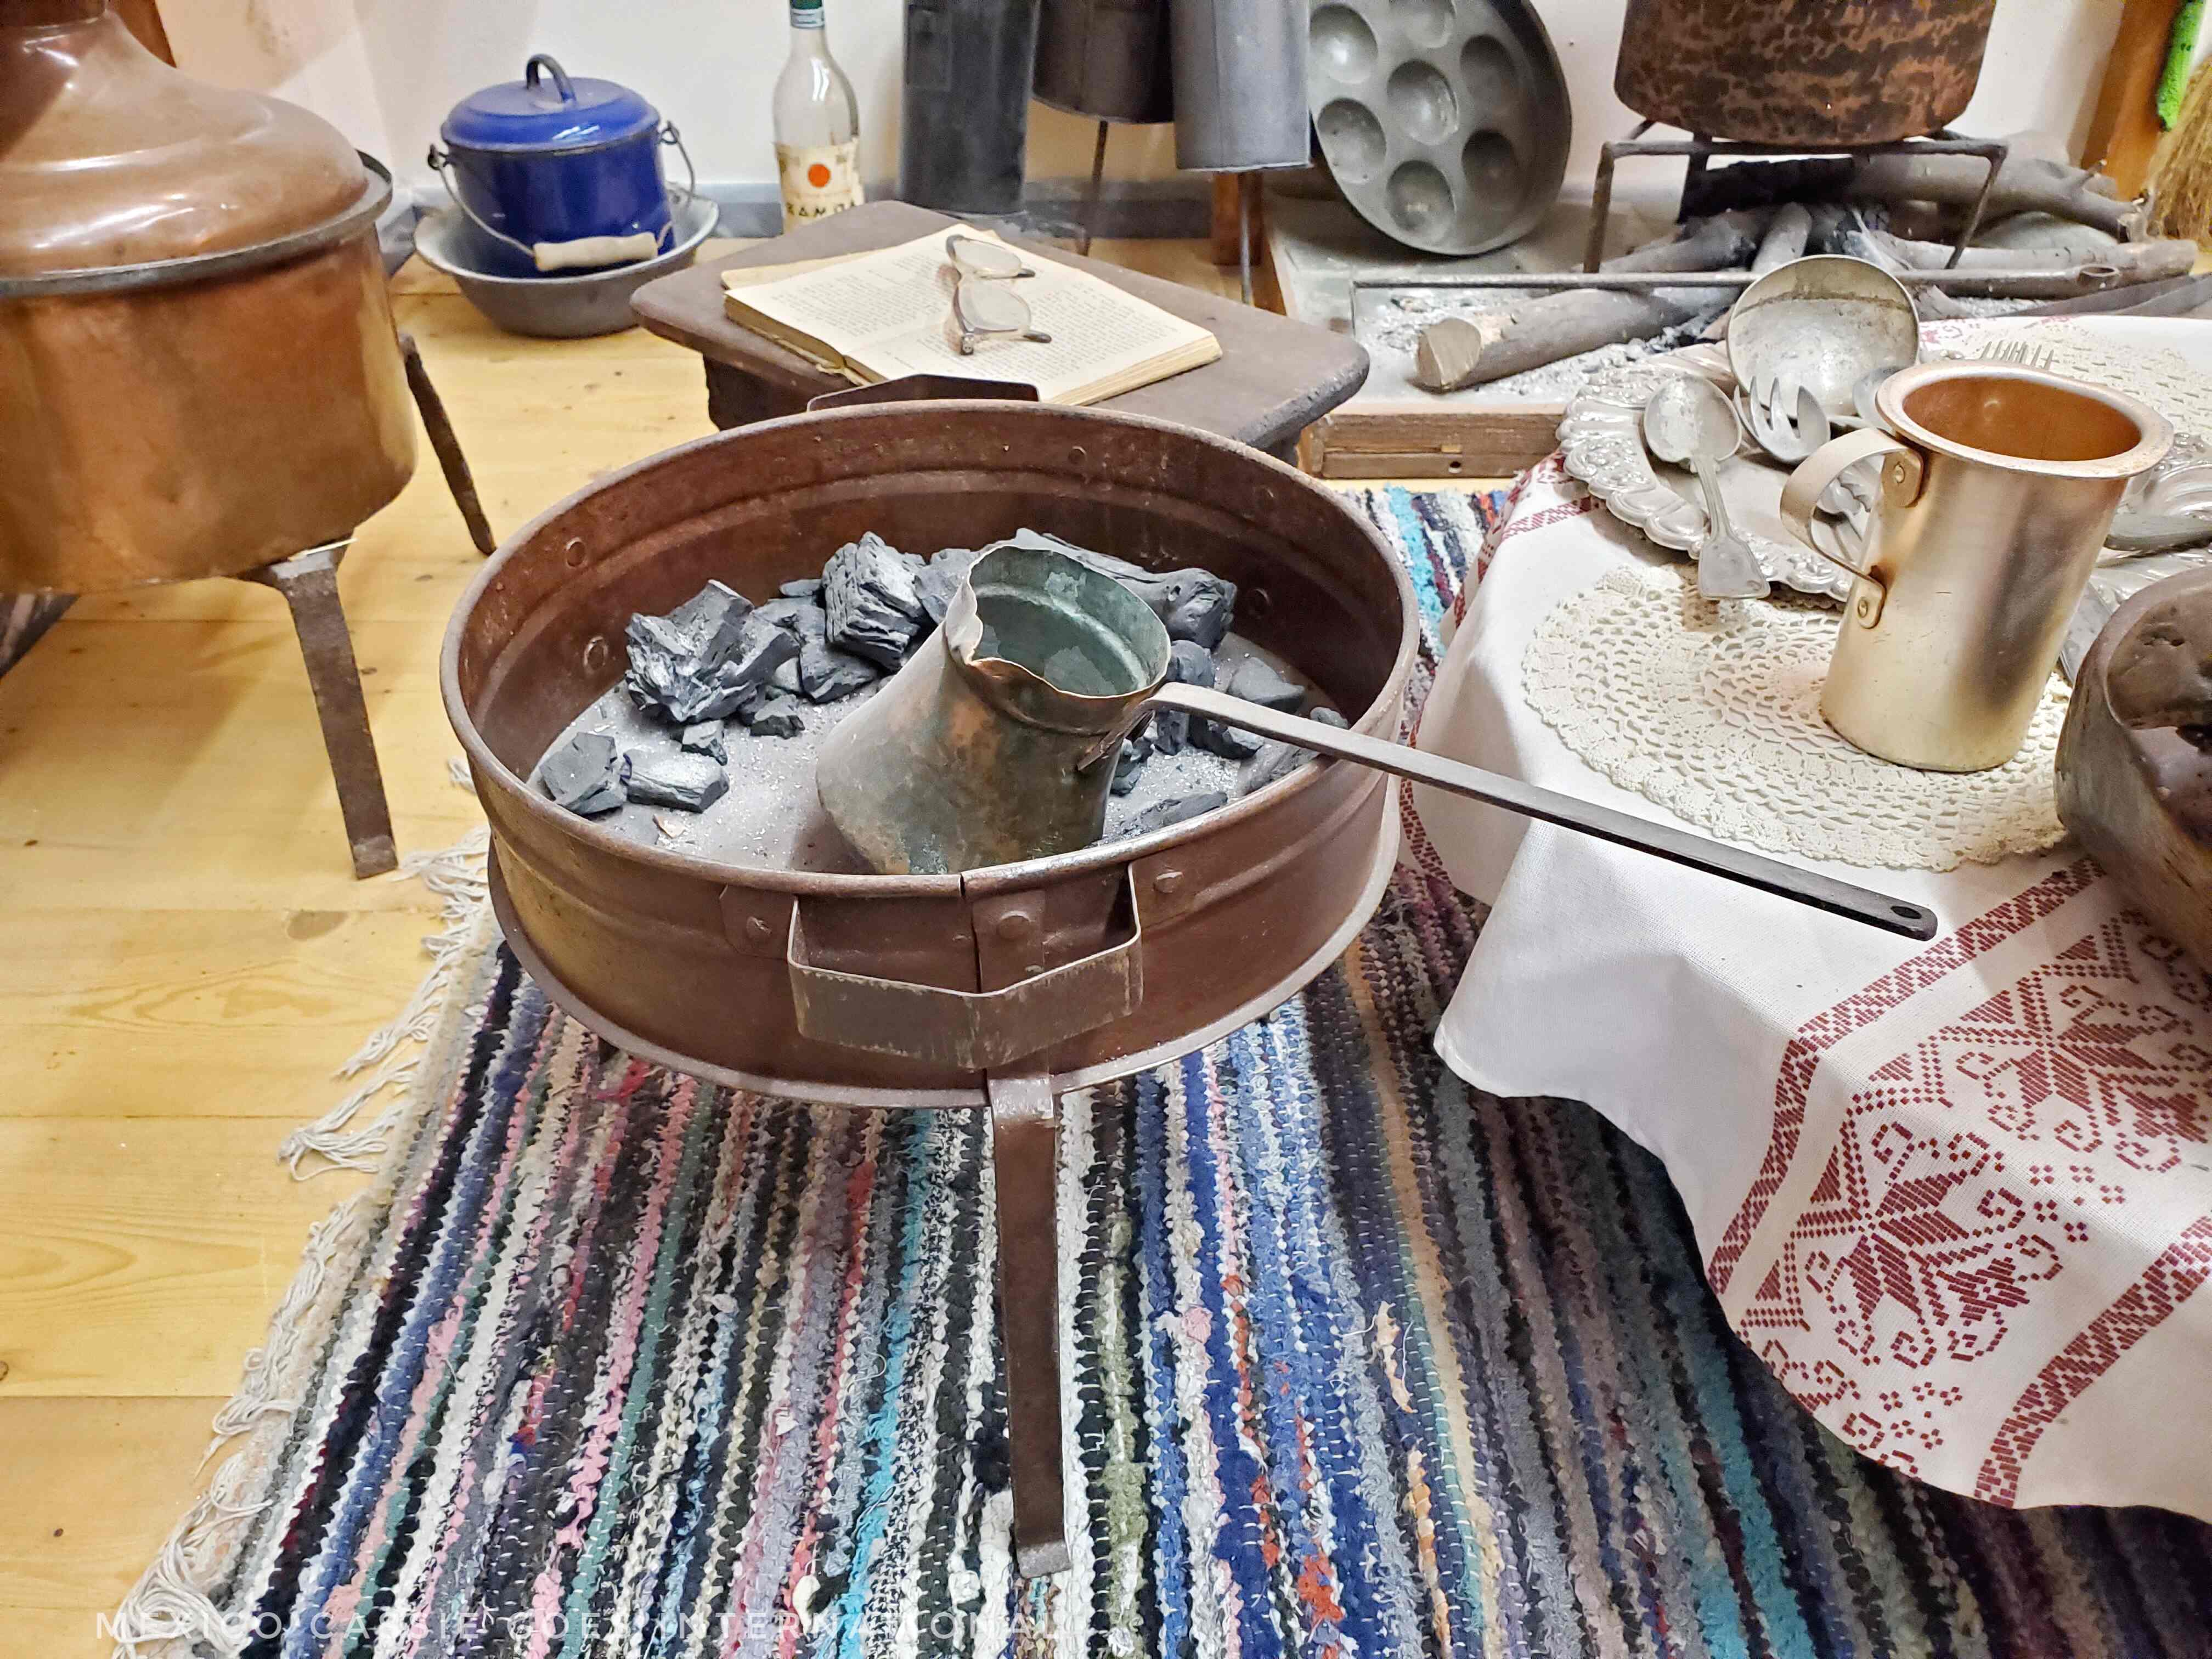 old fashioned coffee making set on a rag rug